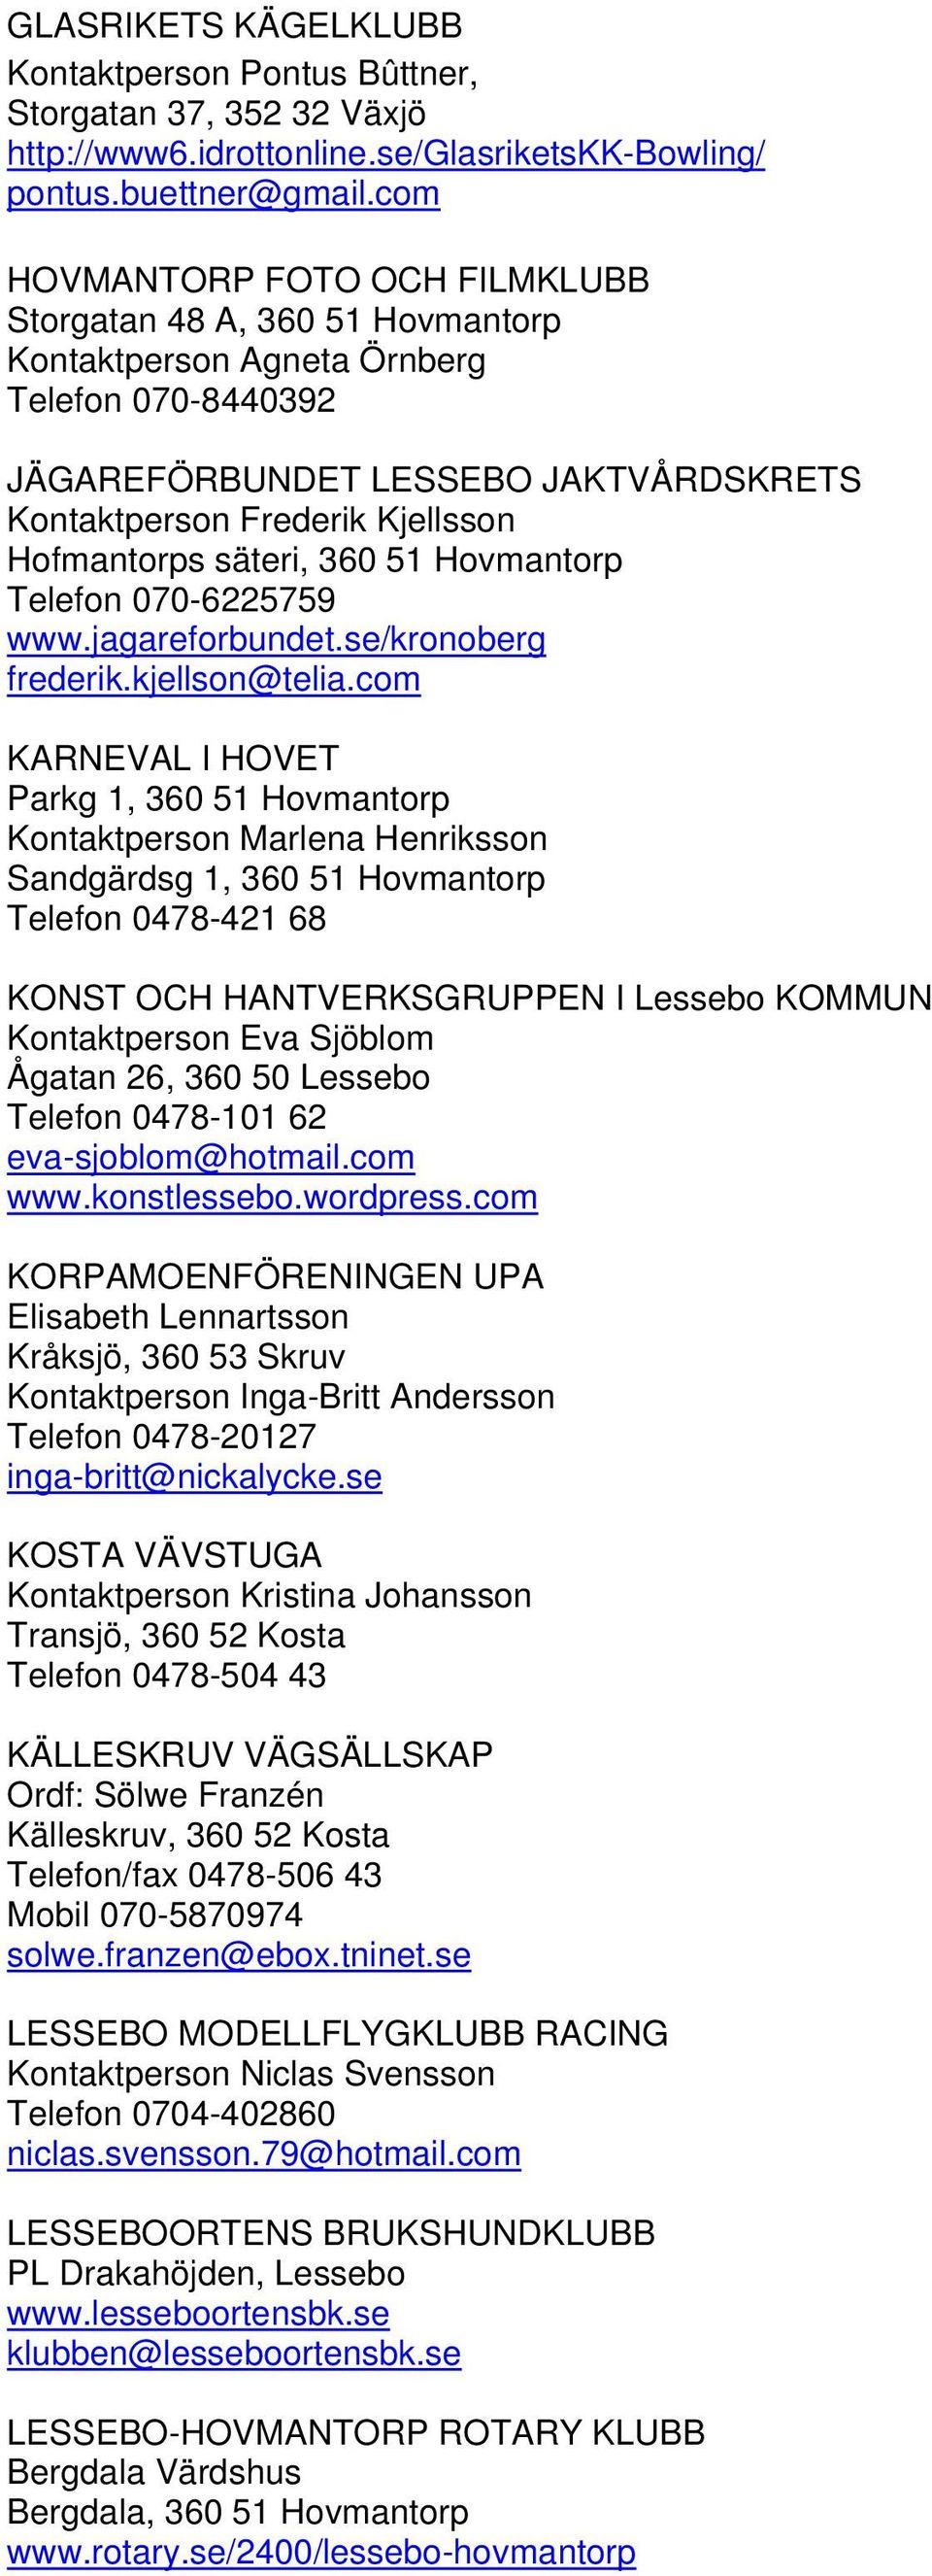 Hofmantorps säteri, 360 51 Hovmantorp Telefon 070-6225759 www.jagareforbundet.se/kronoberg frederik.kjellson@telia.